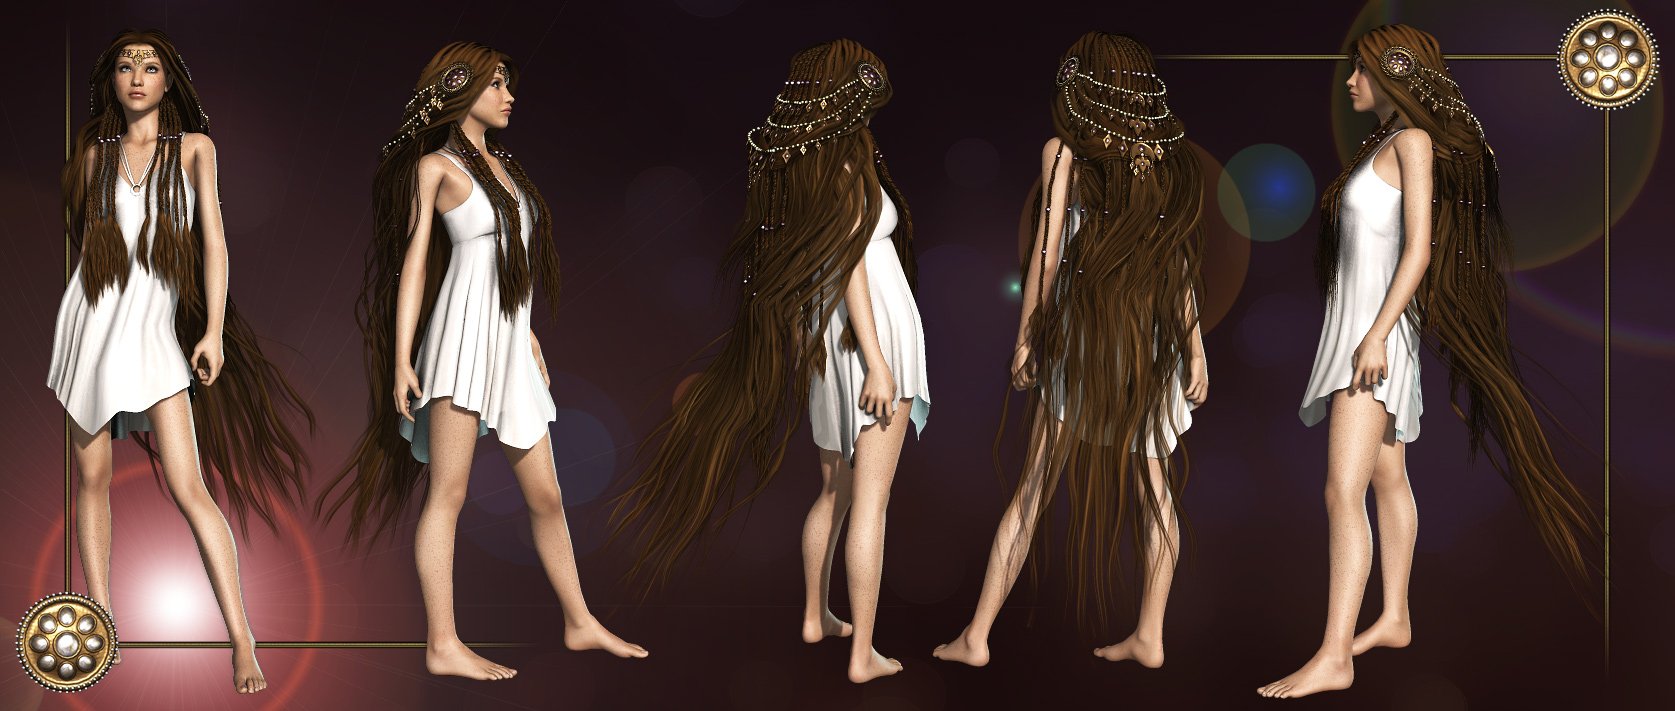 Ampliato - Dragon Keeper Hair by: Anna BenjaminRuntimeDNA, 3D Models by Daz 3D